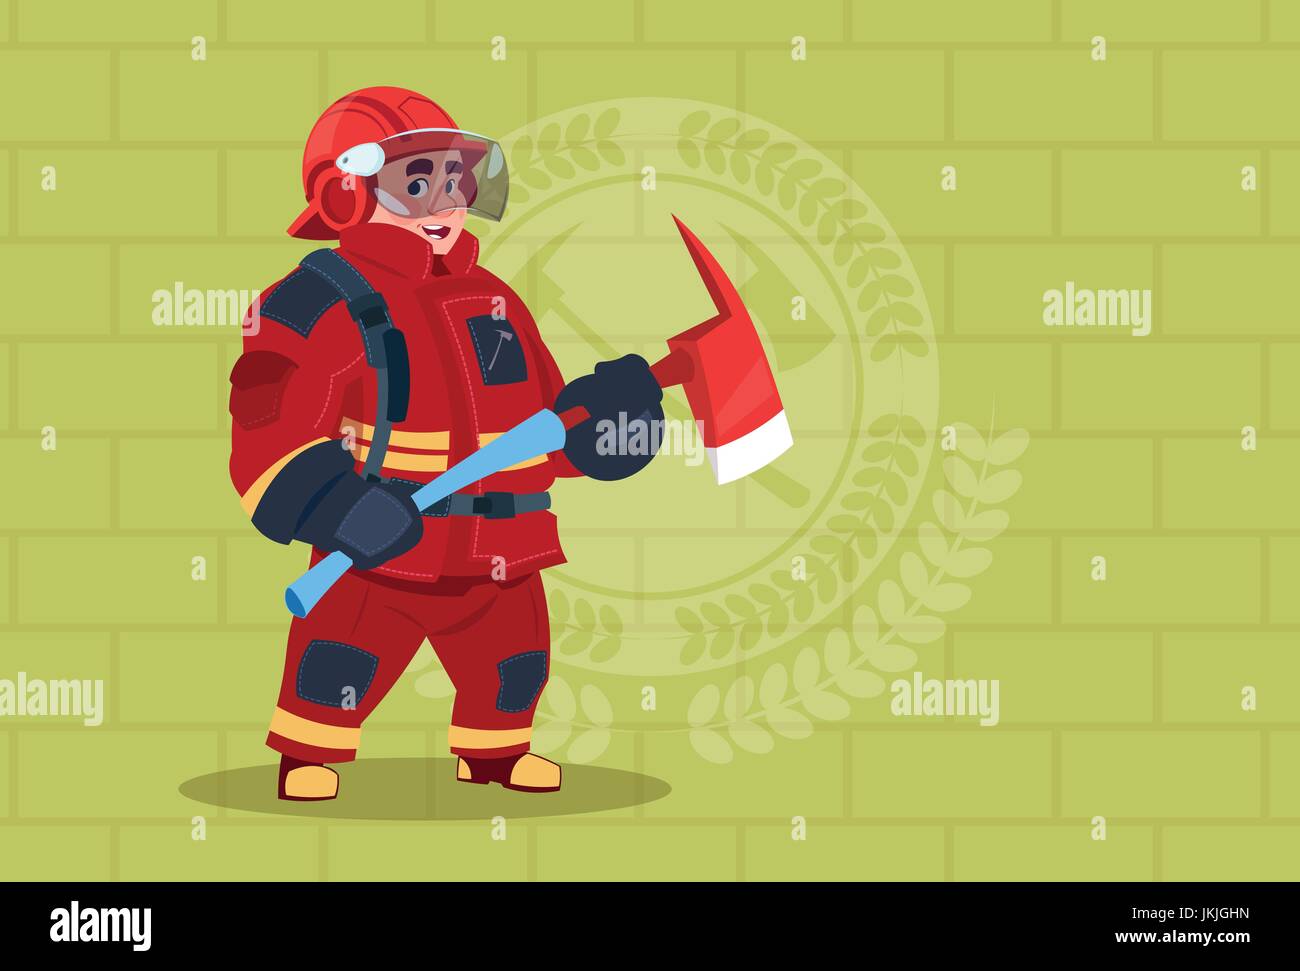 https://c8.alamy.com/compes/jkjghn/bombero-sosteniendo-un-martillo-en-uniforme-y-casco-bombero-adulto-stand-sobre-fondo-de-ladrillo-jkjghn.jpg